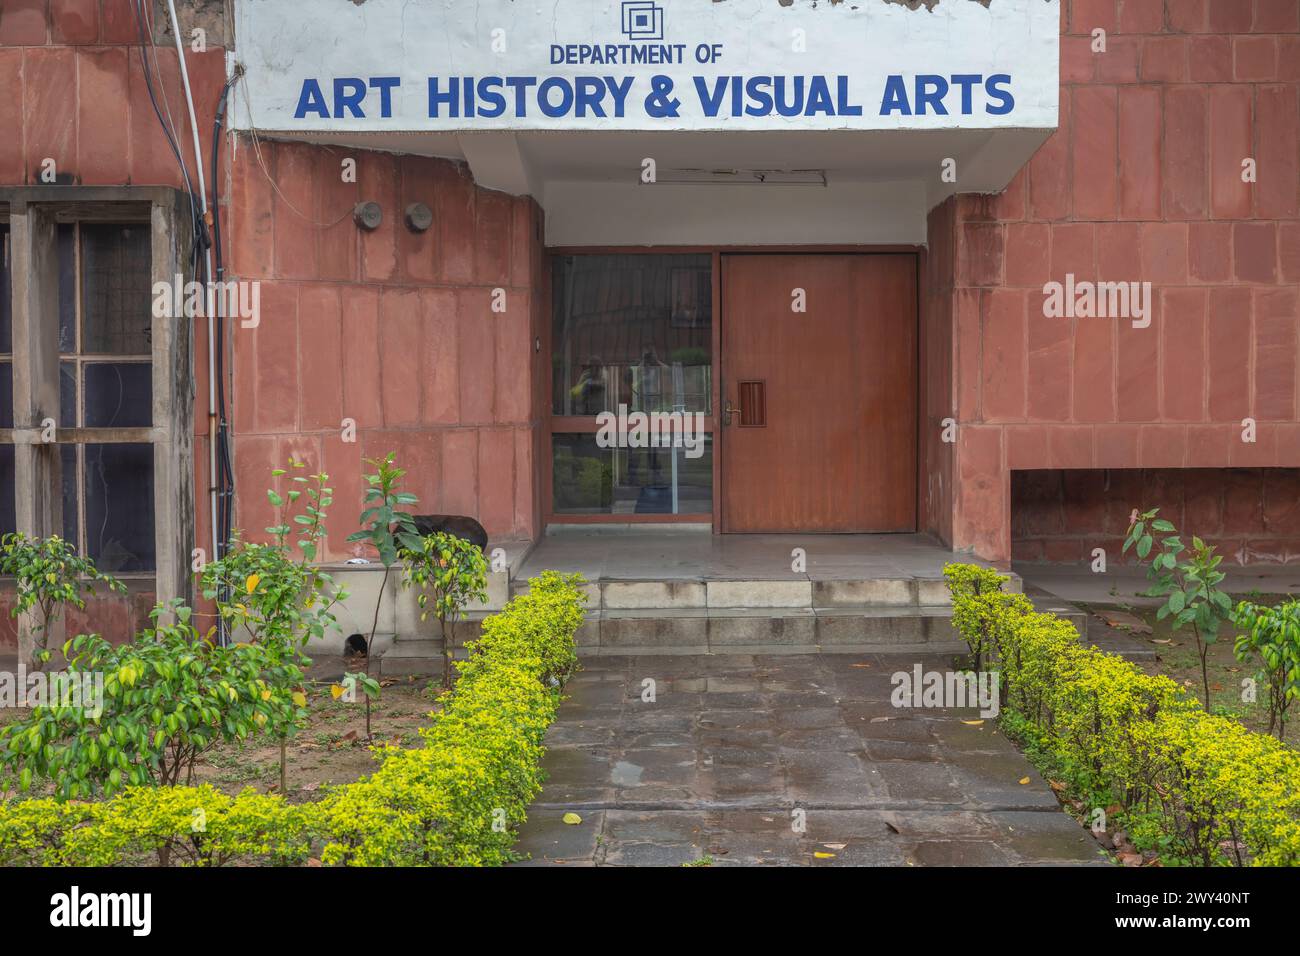 Department of Art History & Visual Arts, Panjab University, Chandigarh, India Stock Photo